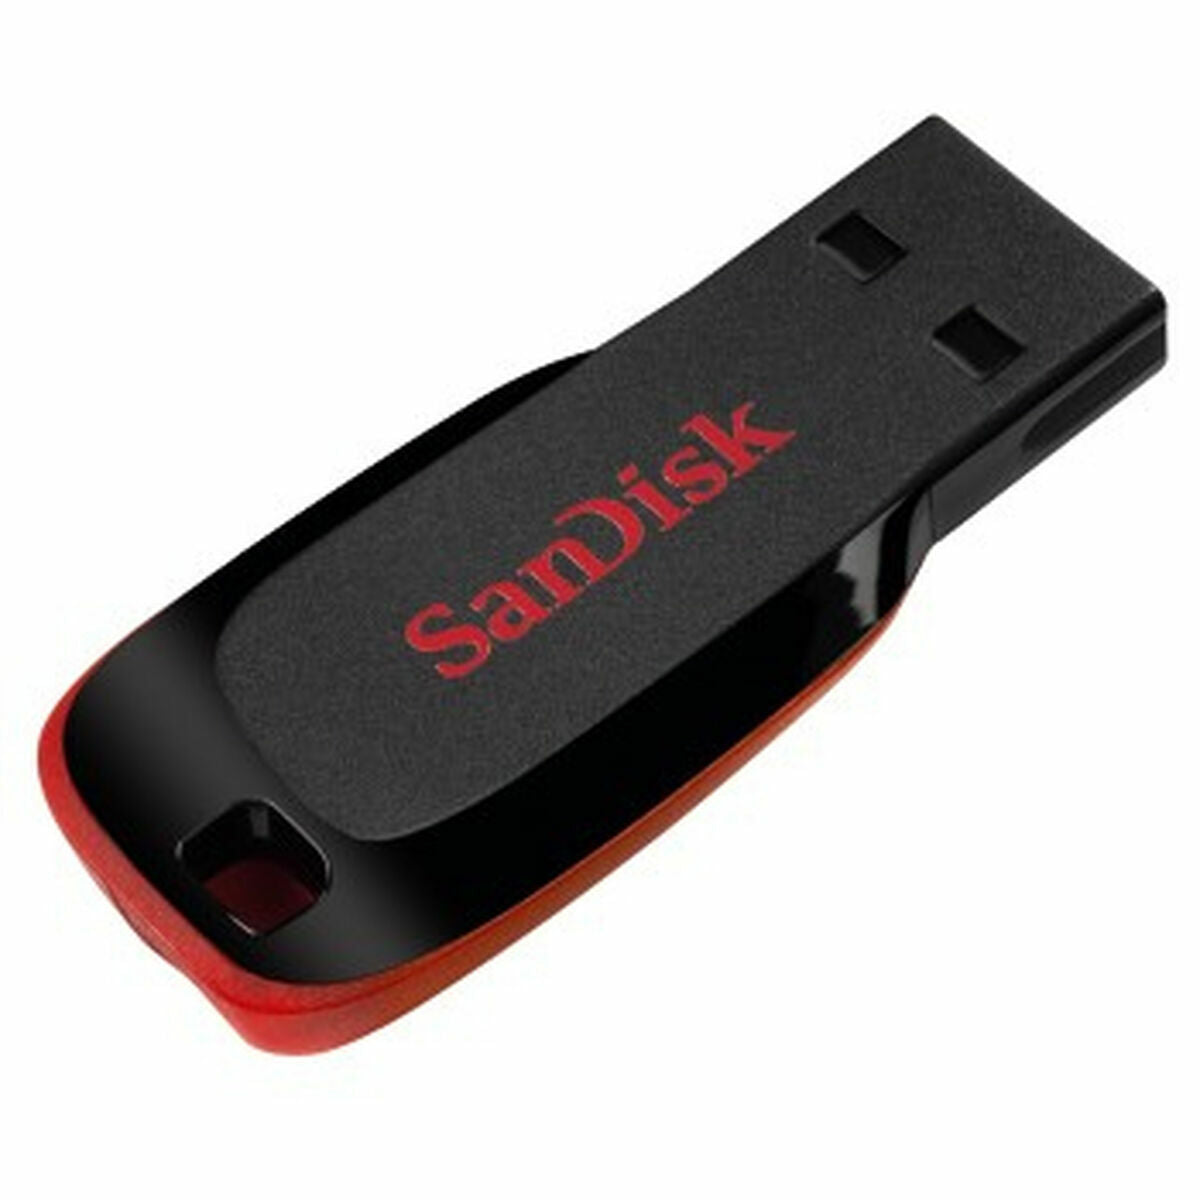 Pendrive SanDisk Cruzer Blade Black 64 GB